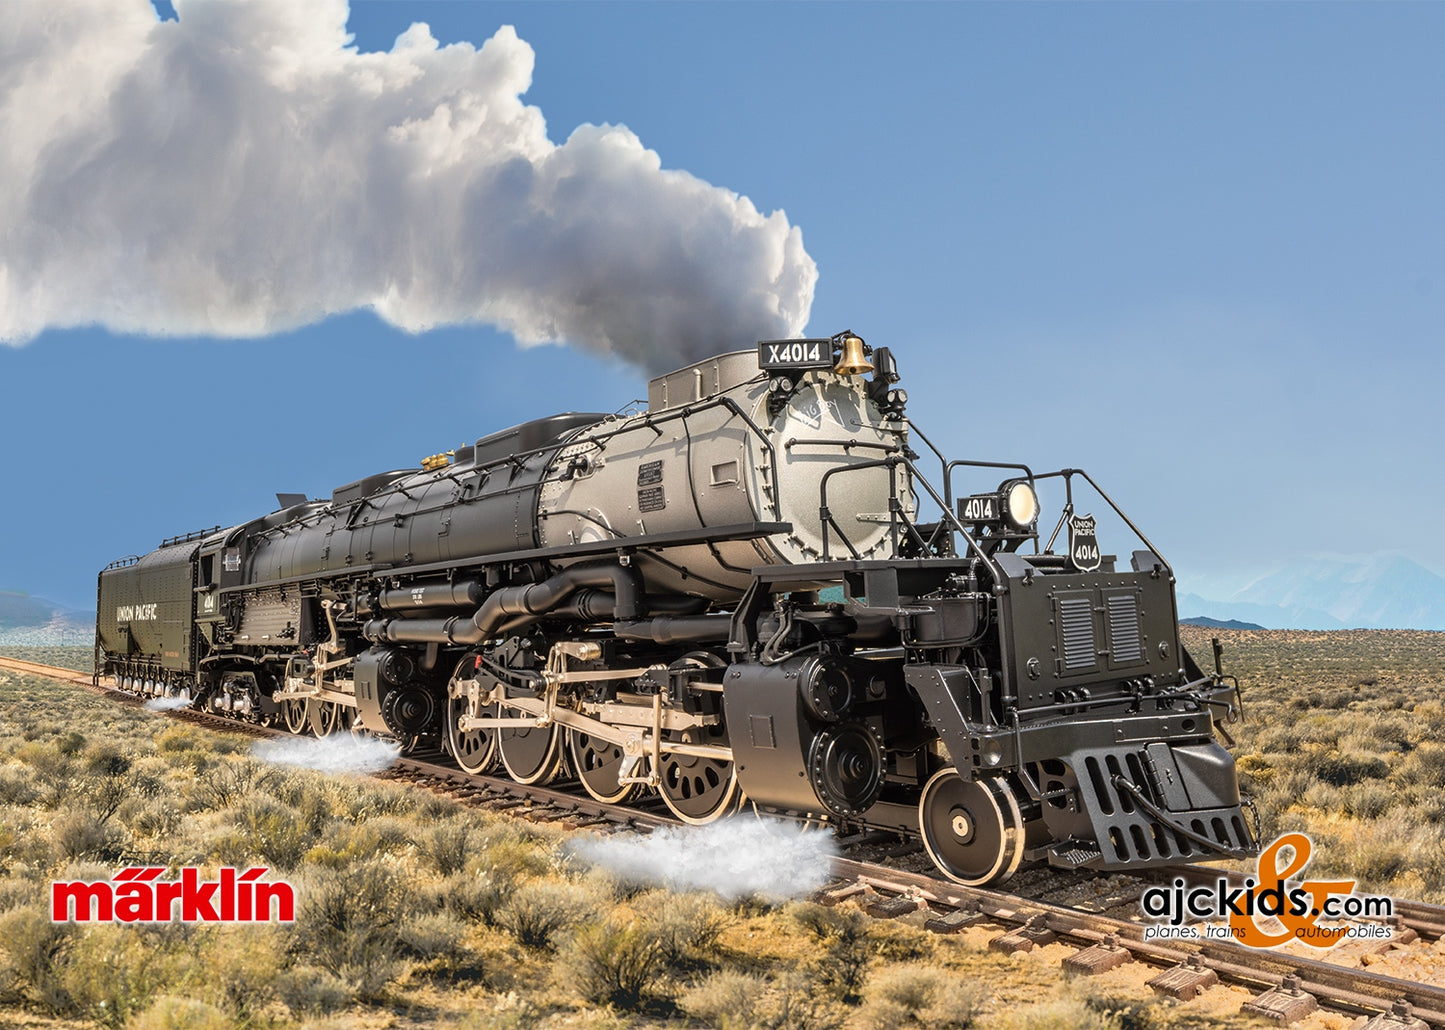 Marklin 55990 - Class 4000 Steam Locomotive Big Boy at Ajckids.com